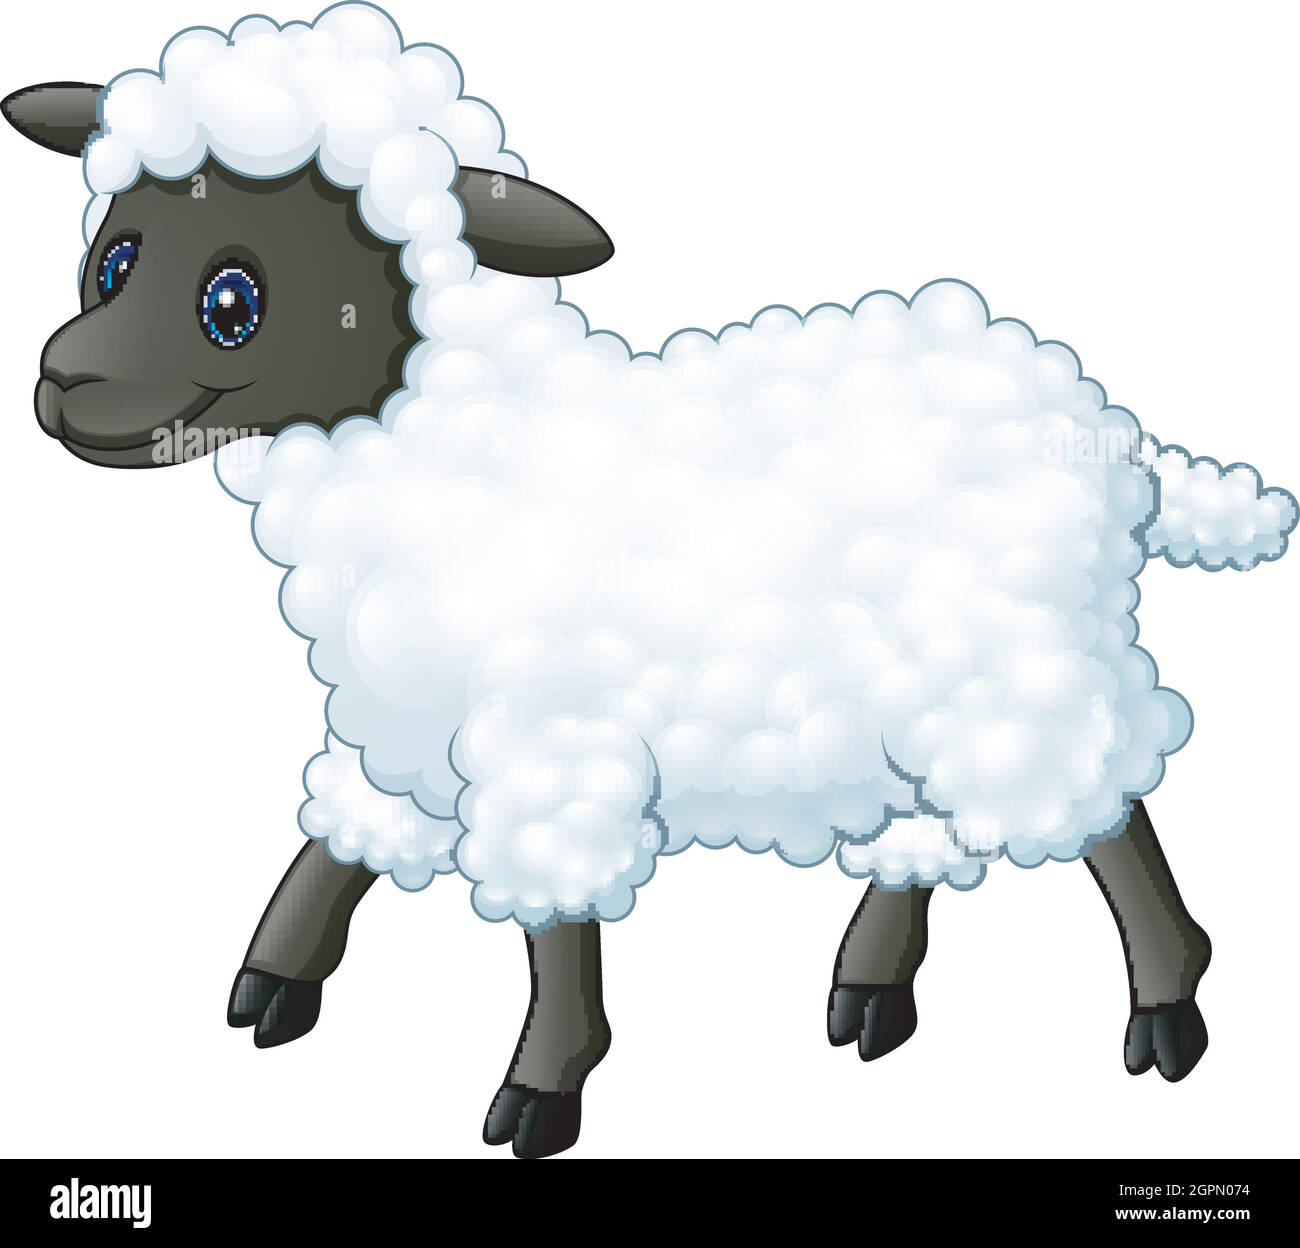 Vector illustration of Cute sheep cartoon Stock Vector